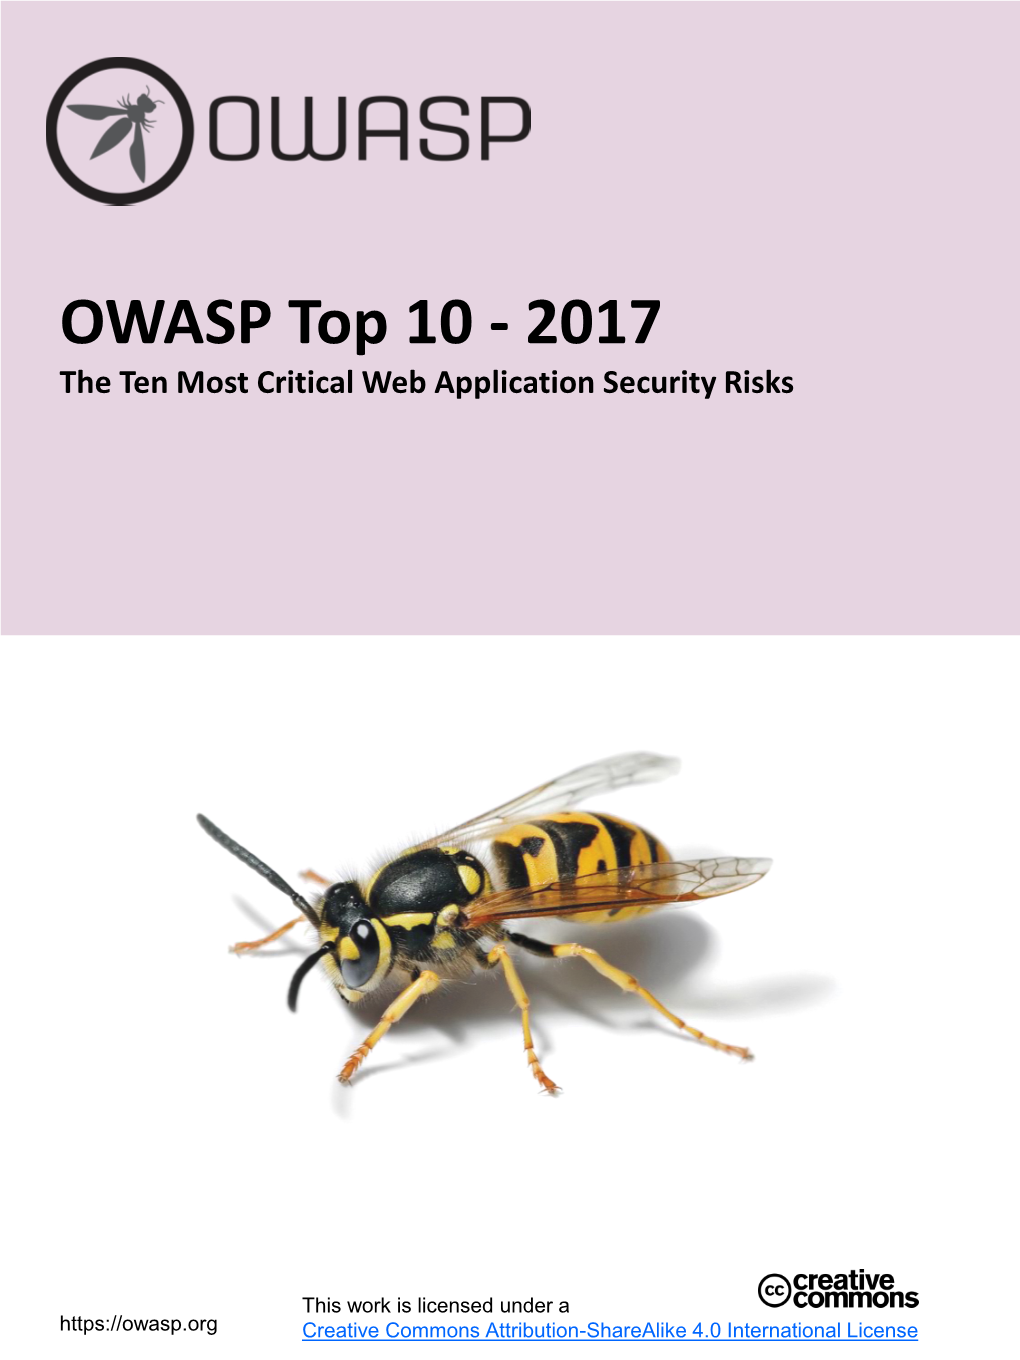 OWASP Top 10 - 2017 the Ten Most Critical Web Application Security Risks